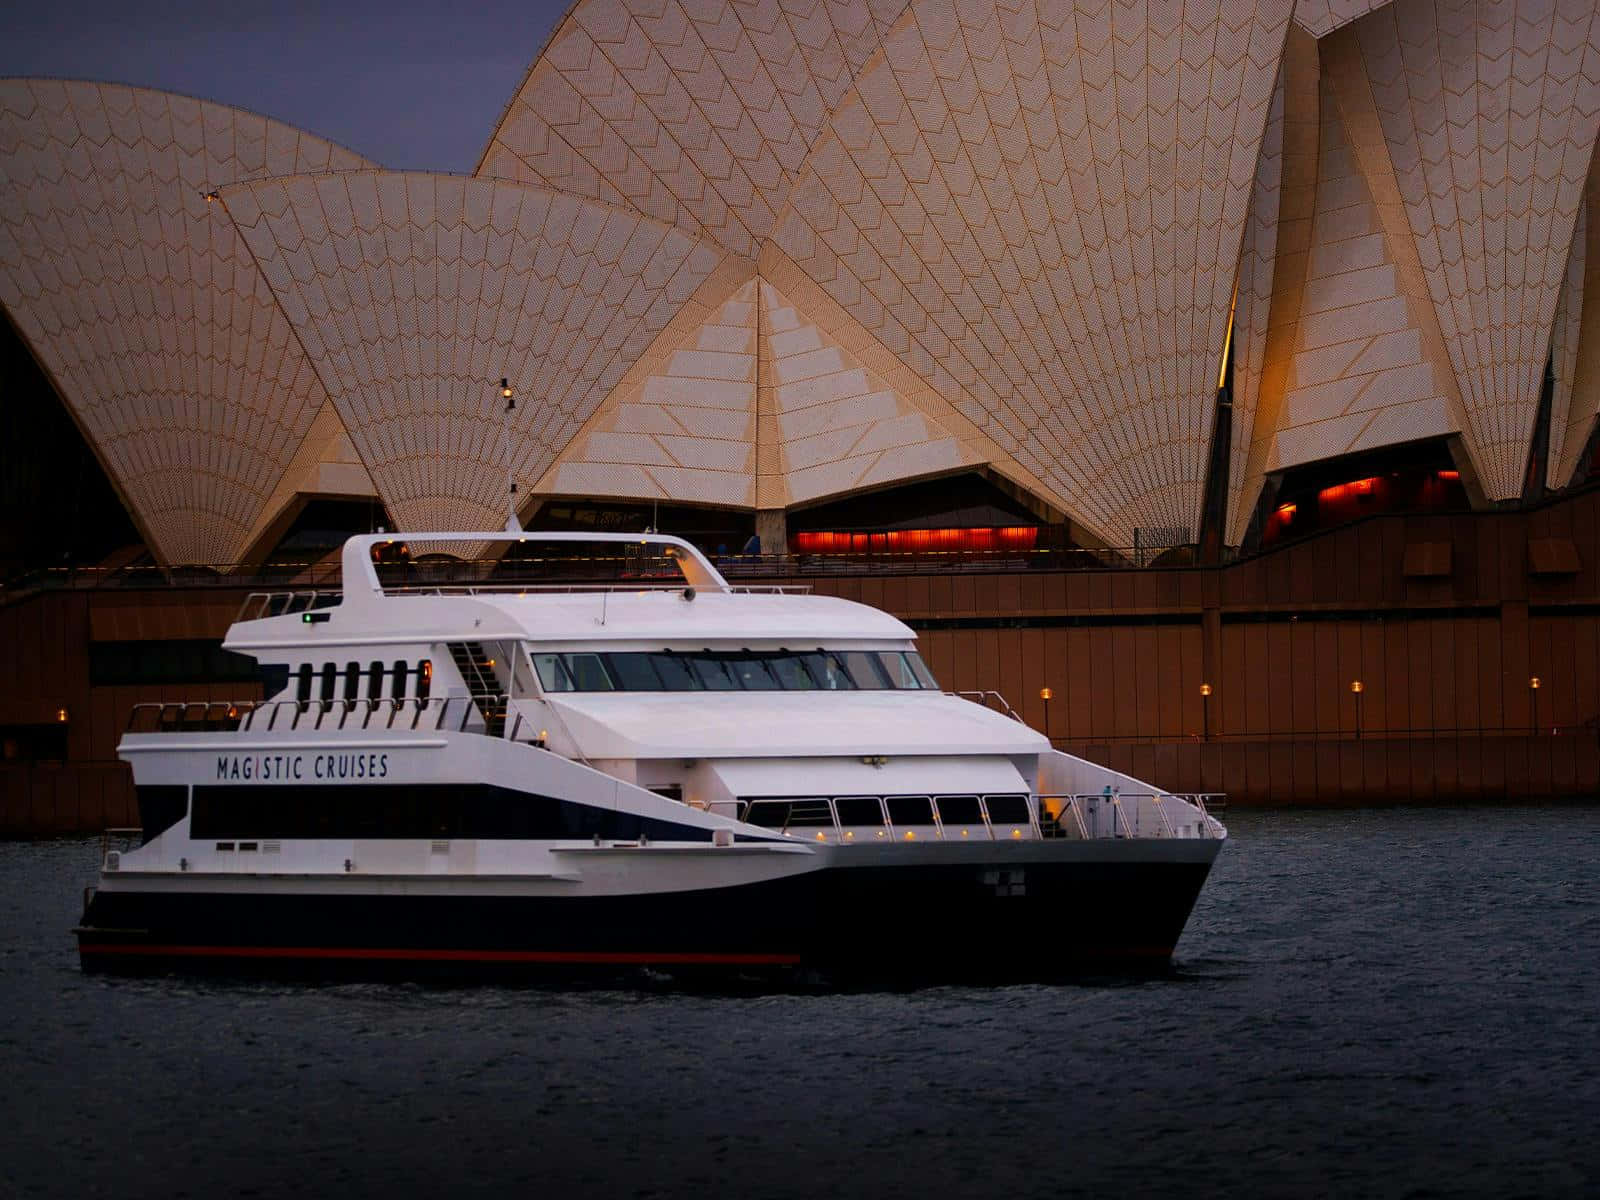 Sydney Opera Houseand Cruise Shipat Dusk Wallpaper